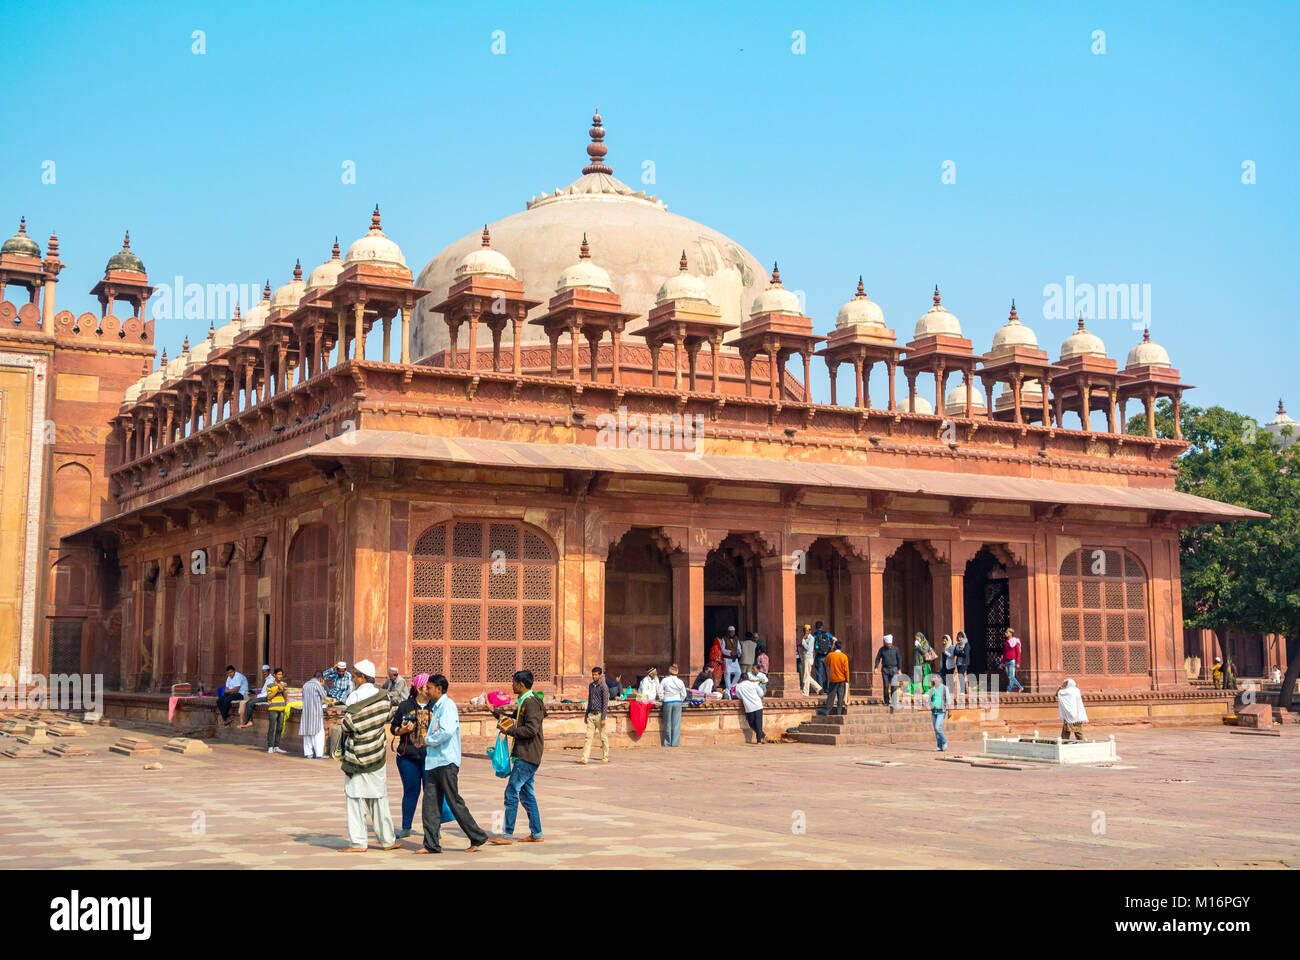 fatehpur sikri, Uttar Pradesh, Agra, India, 27th de enero, 2017: La arquitectura de la Tumba del Khan del Islam Foto de stock